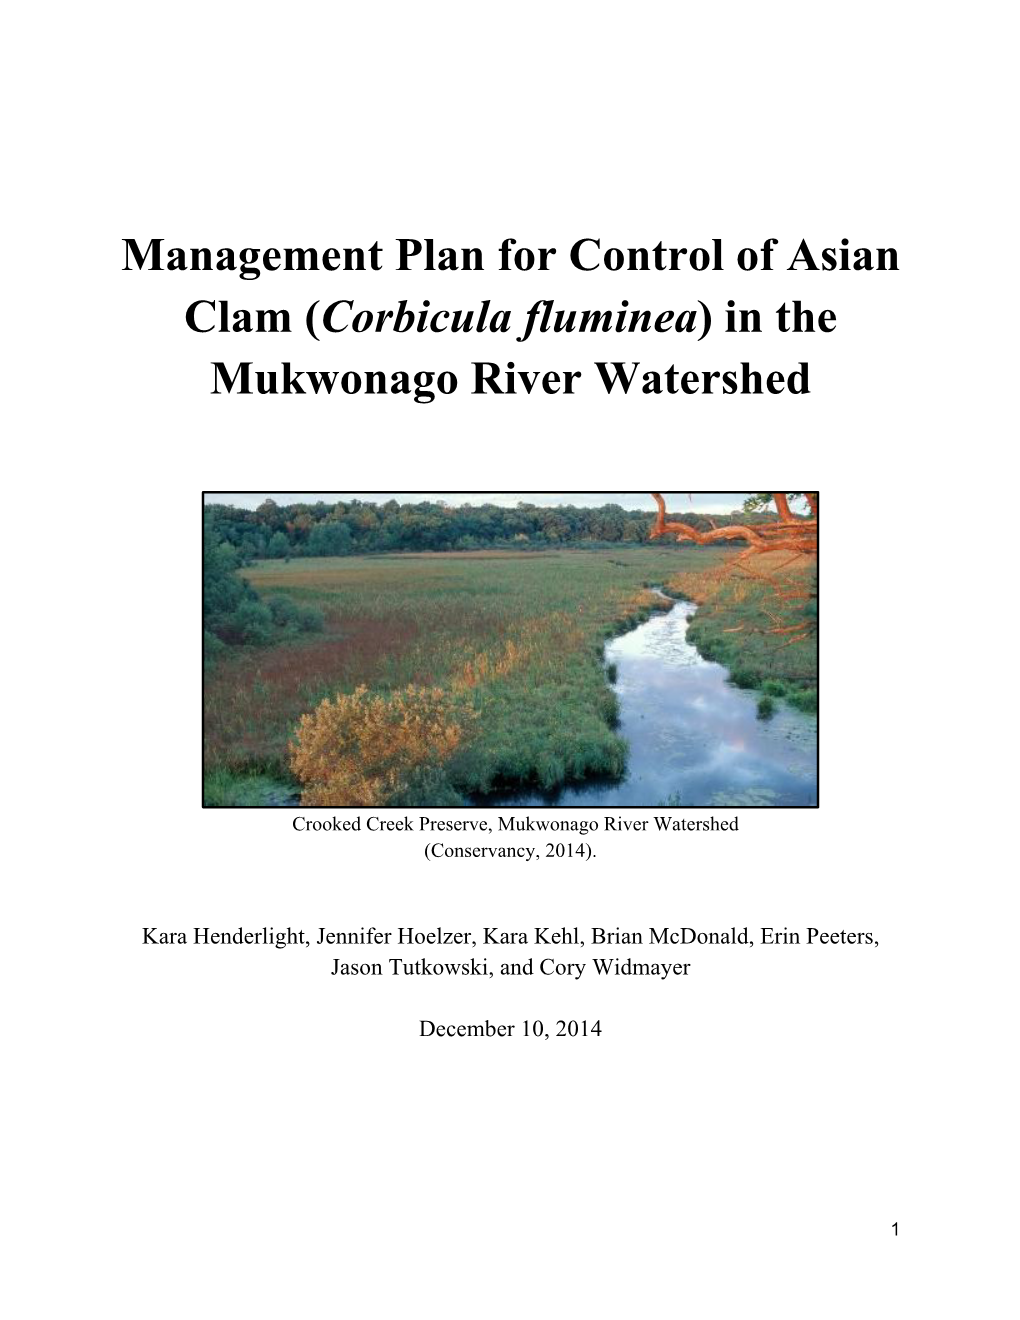 Corbicula Management Plan